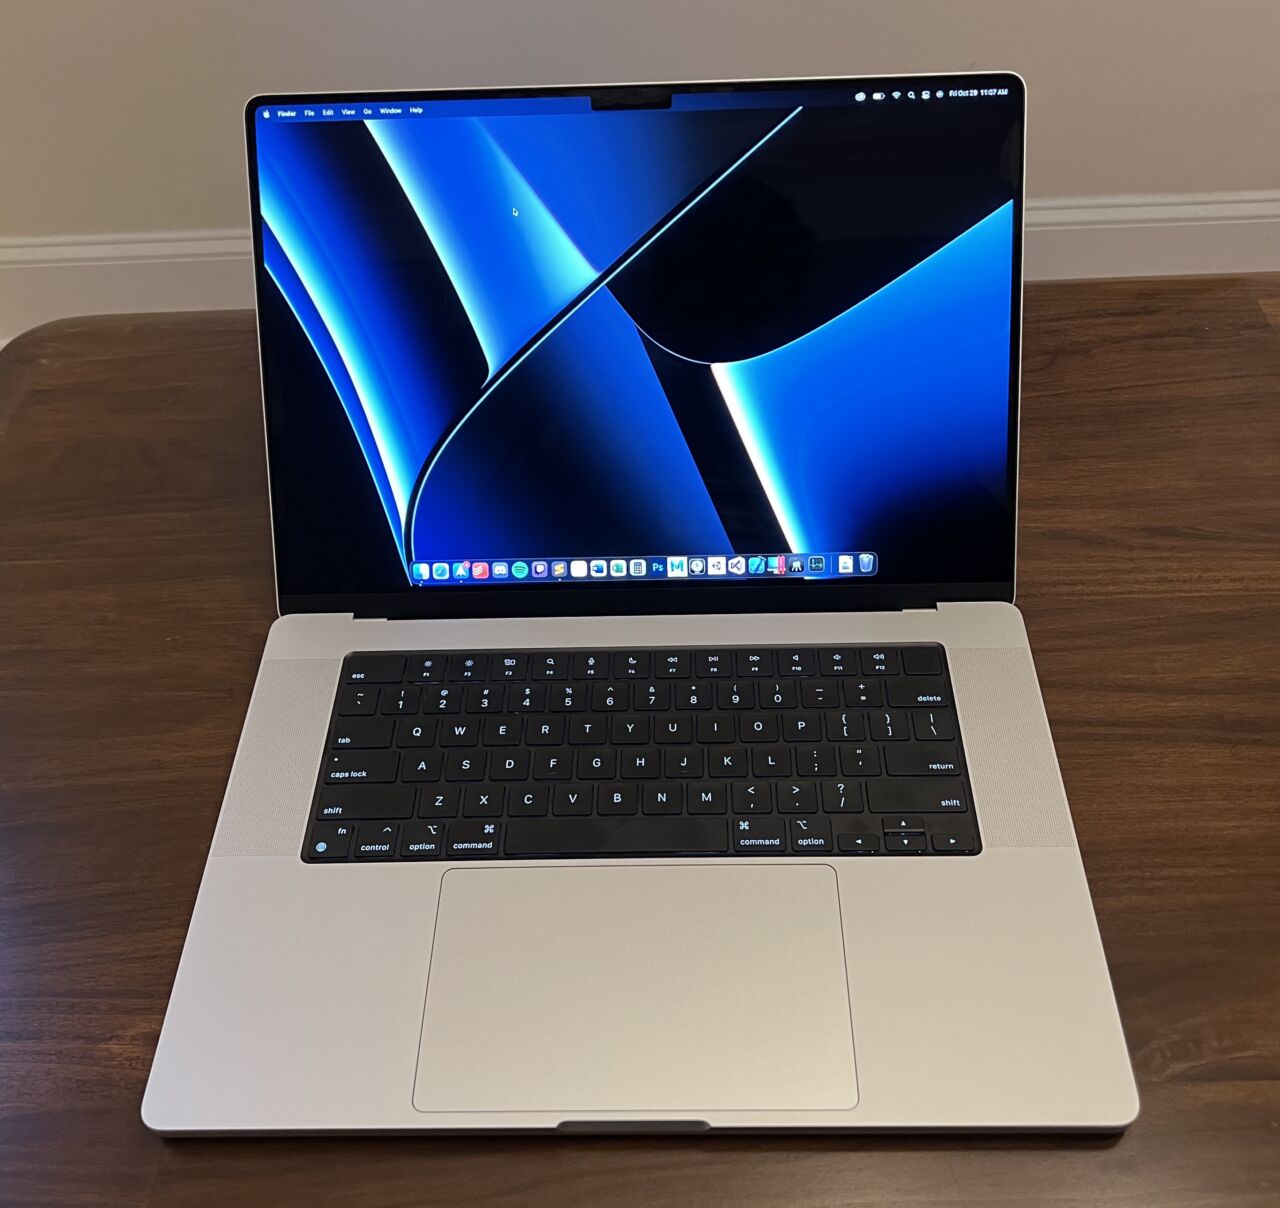 The 2021 16-inch MacBook Pro